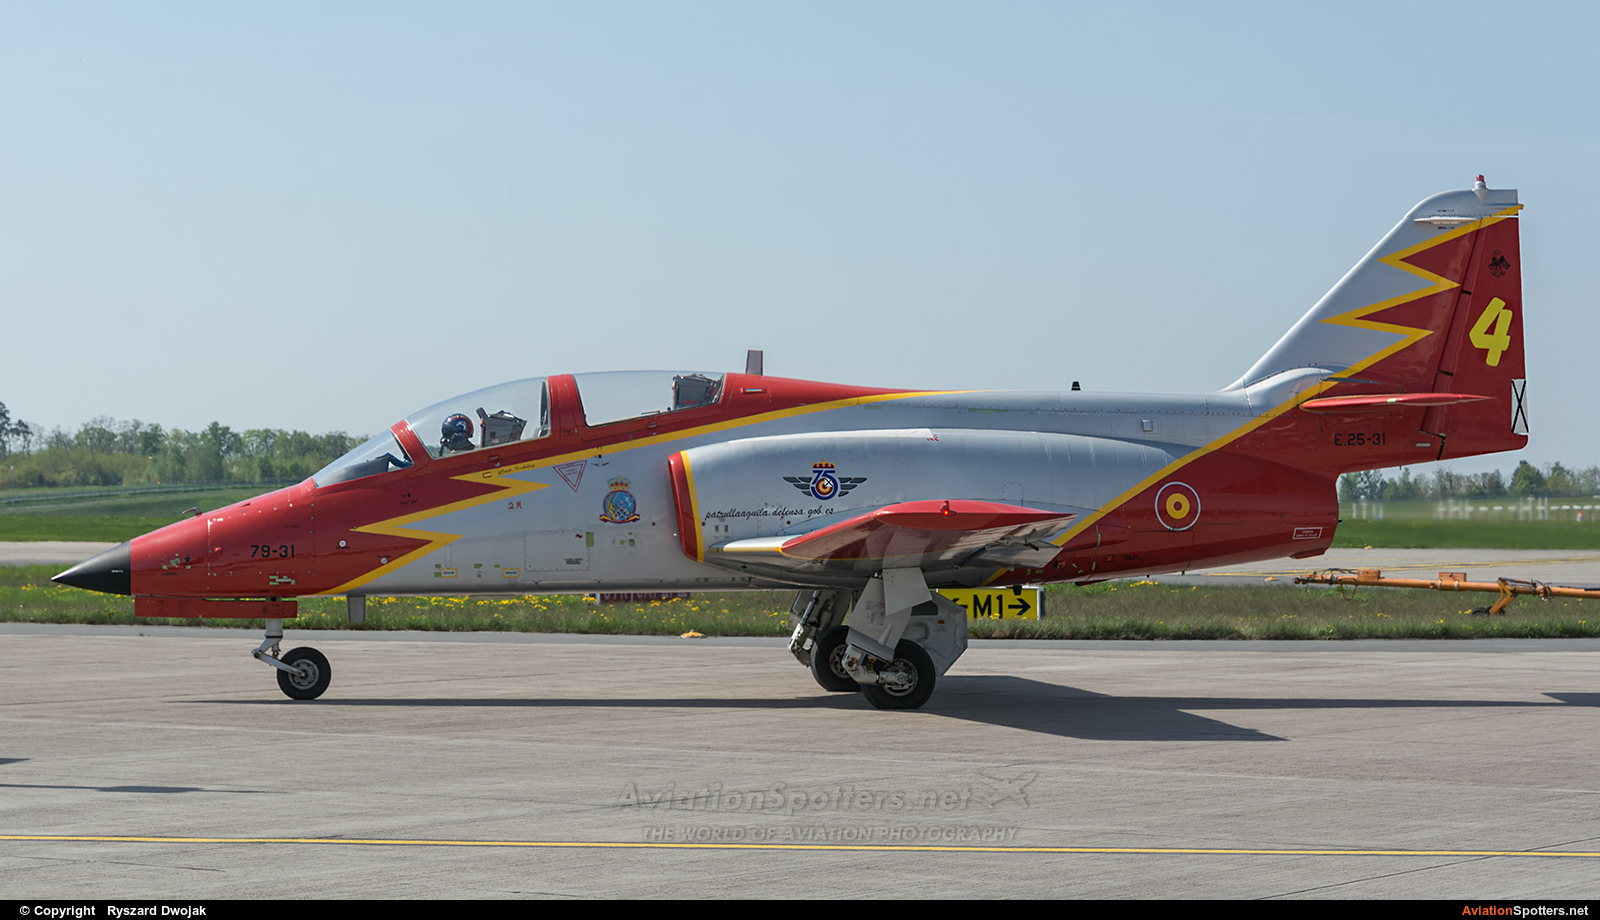 Spain - Air Force : Patrulla Aguila  -  C-101EB Aviojet  (E.25-31) By Ryszard Dwojak (ryś)